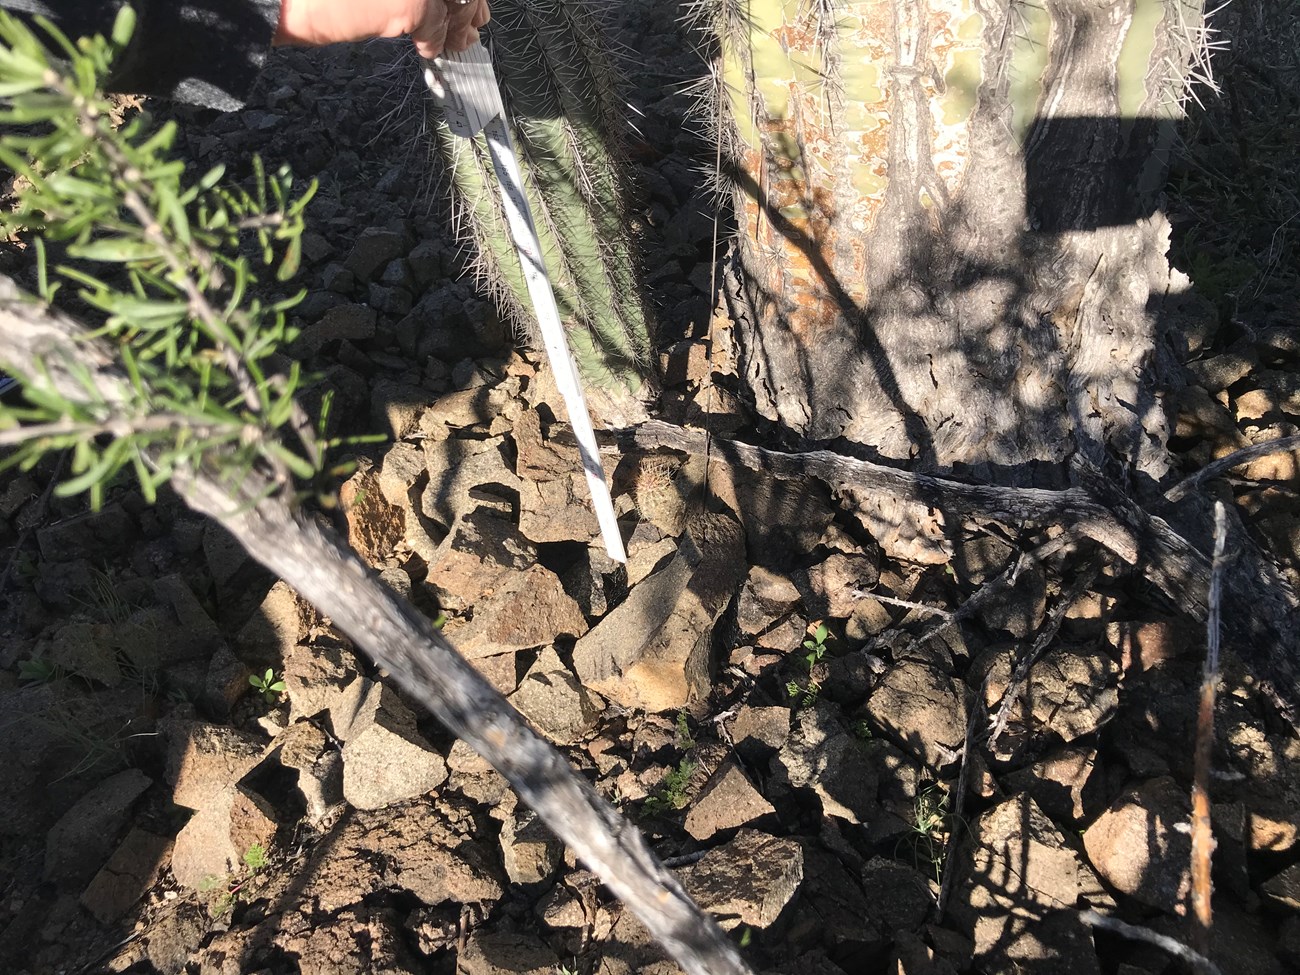 Tiny saguaro at the base of a larger saguaro gets measured